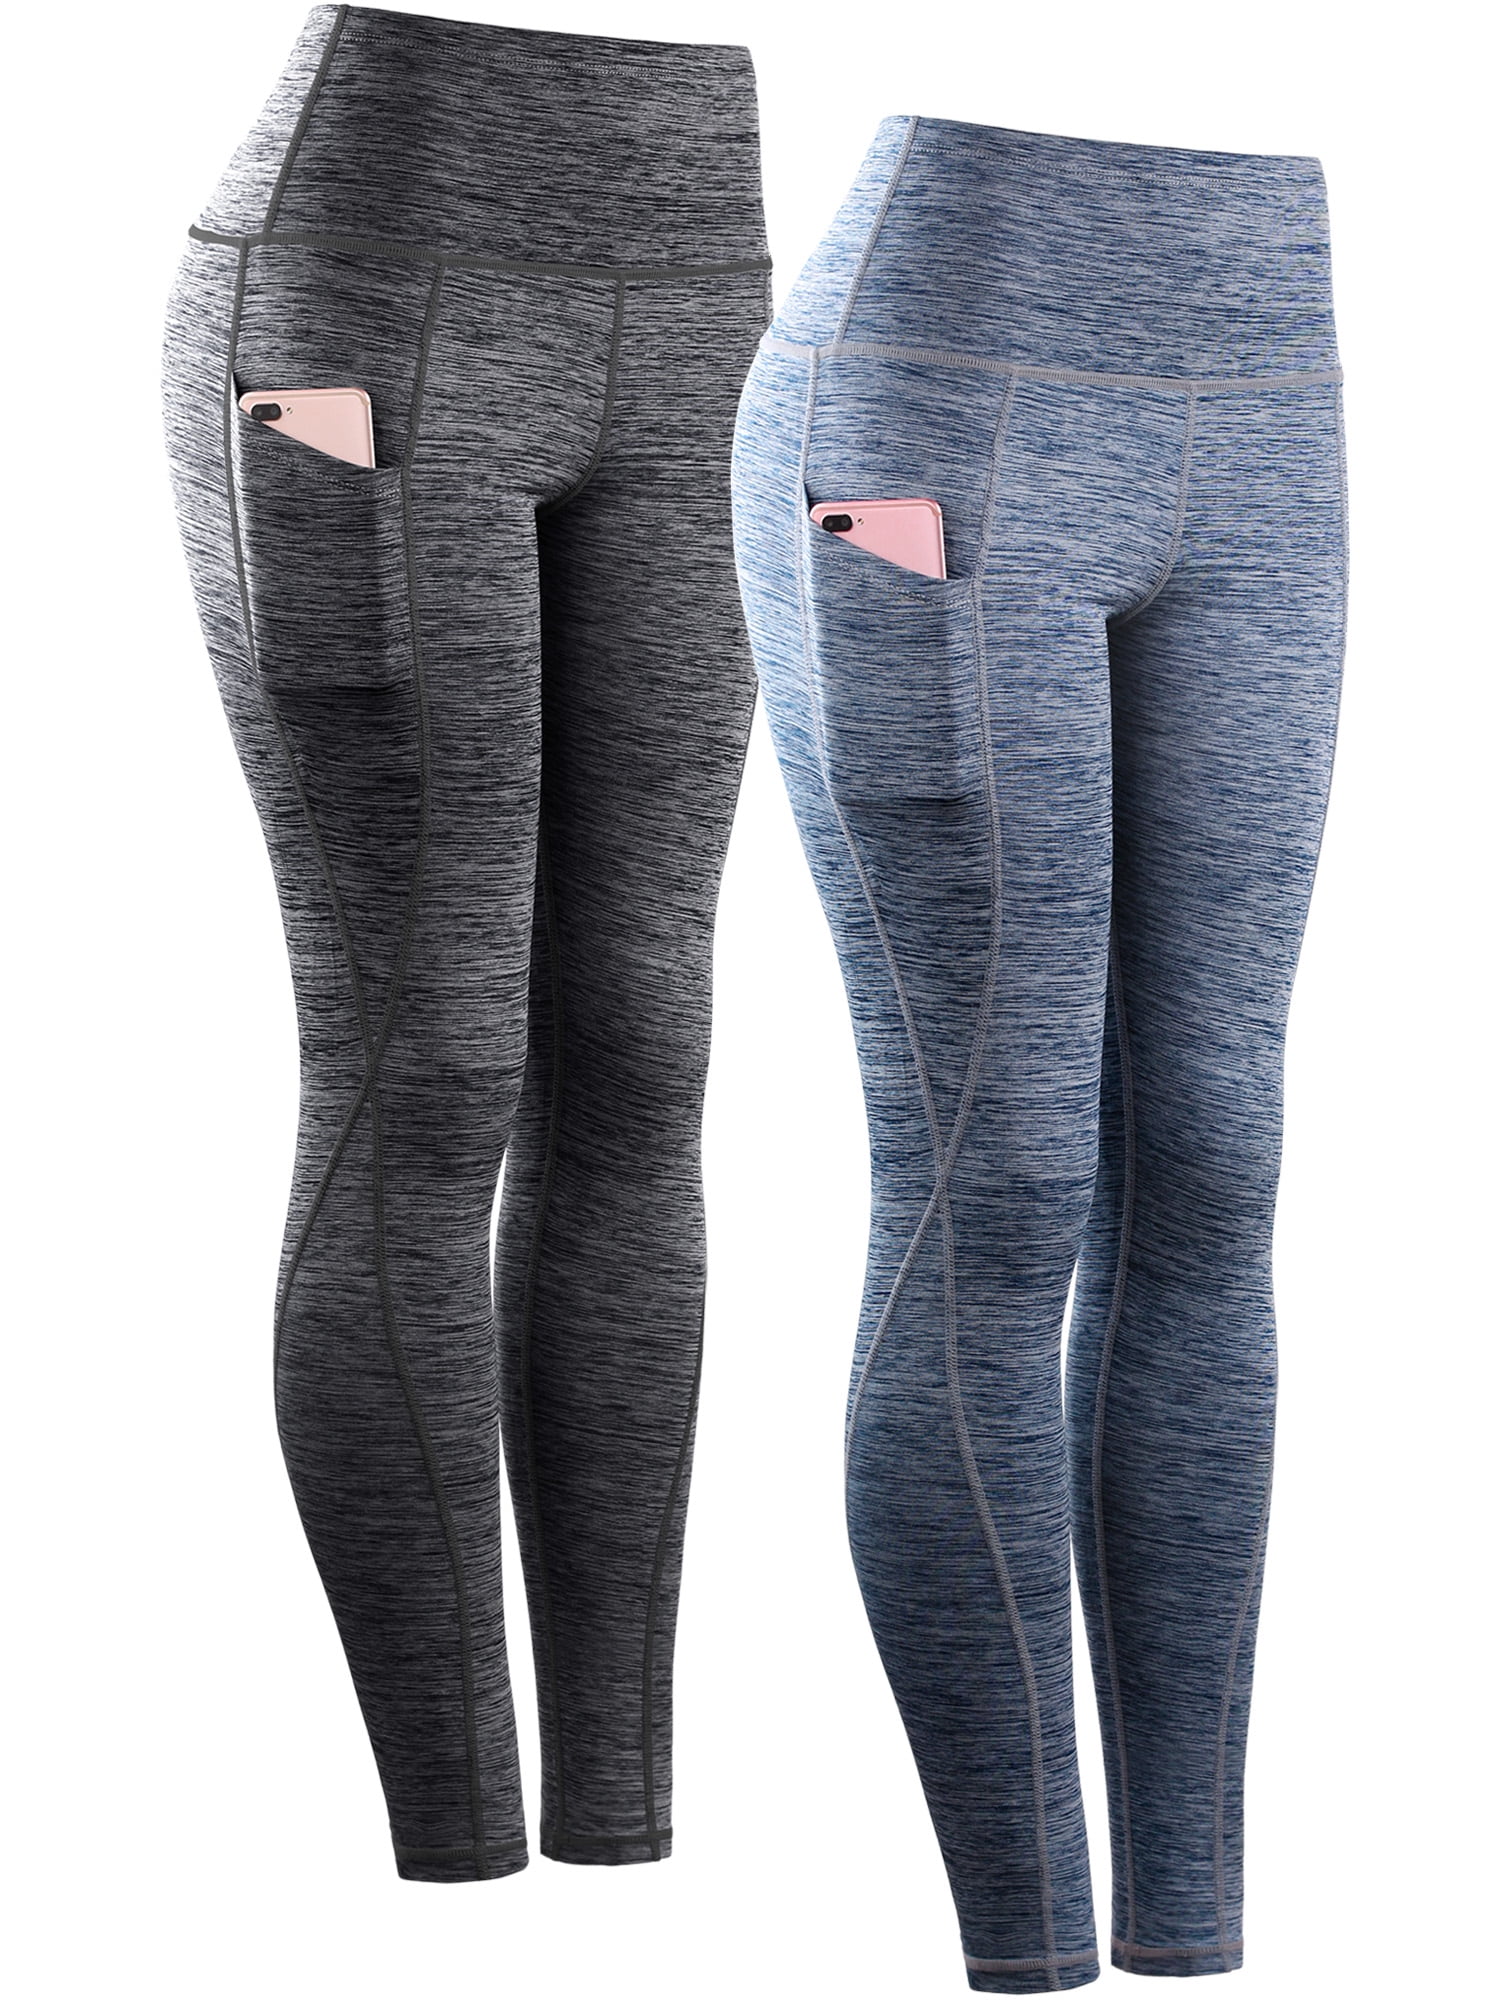 EQWLJWE Yoga Pants for Women, Side Mesh Sports Pants Elastic Slim Yoga  Leggings Perspective Running Pants 